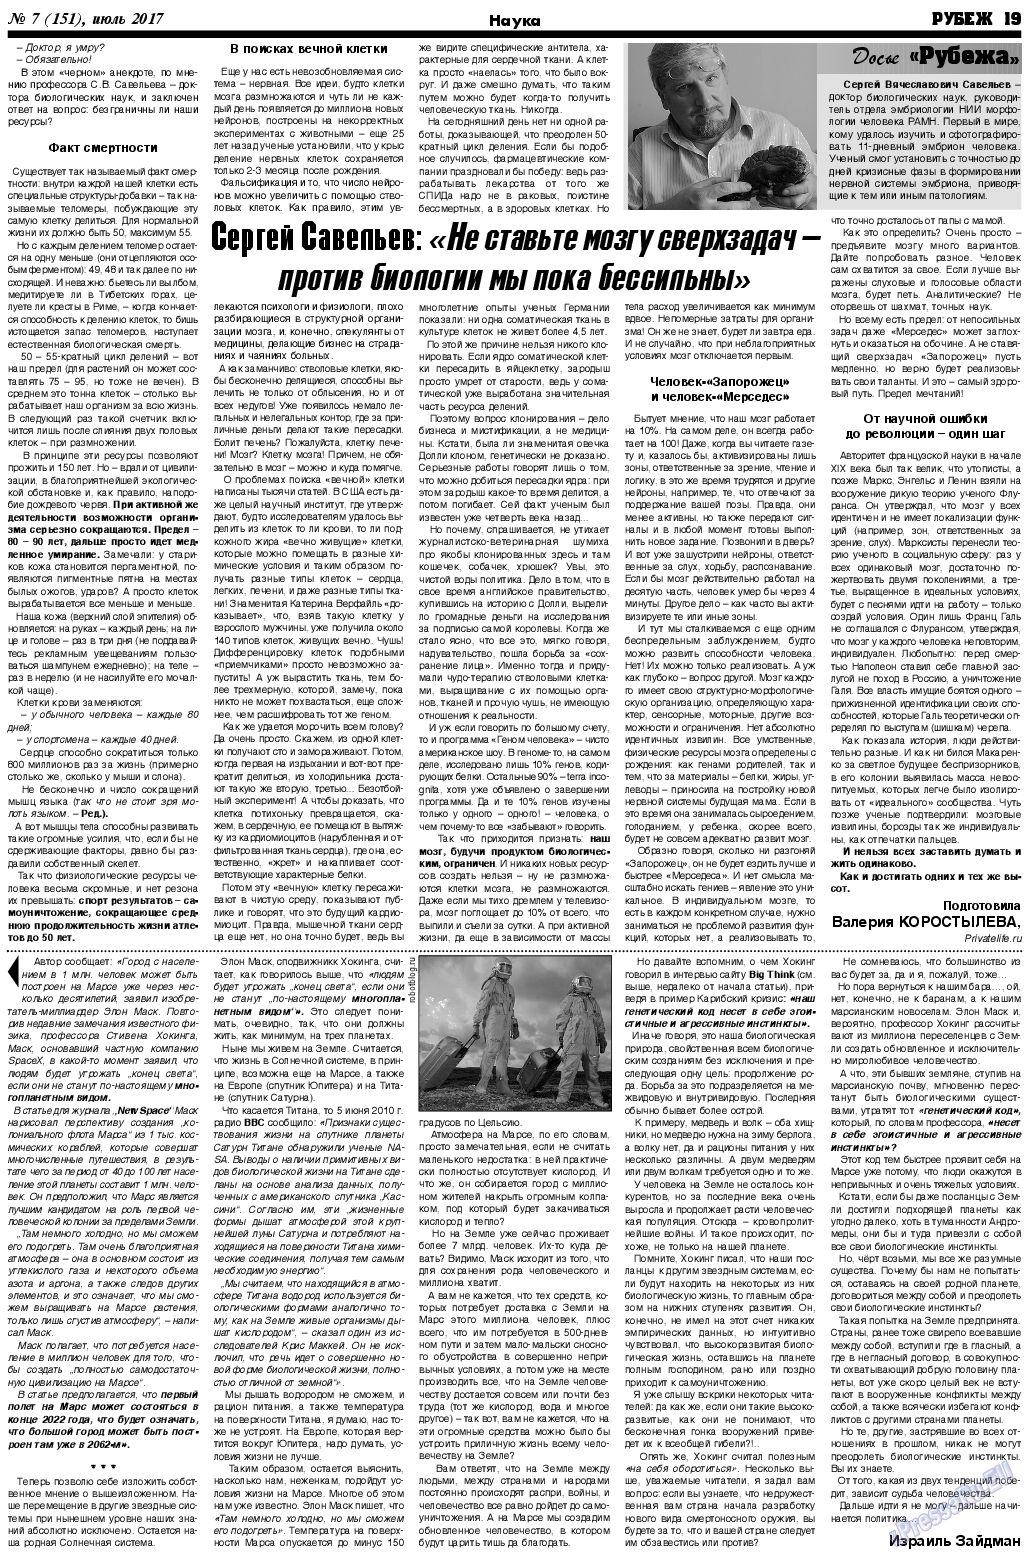 Рубеж, газета. 2017 №7 стр.19